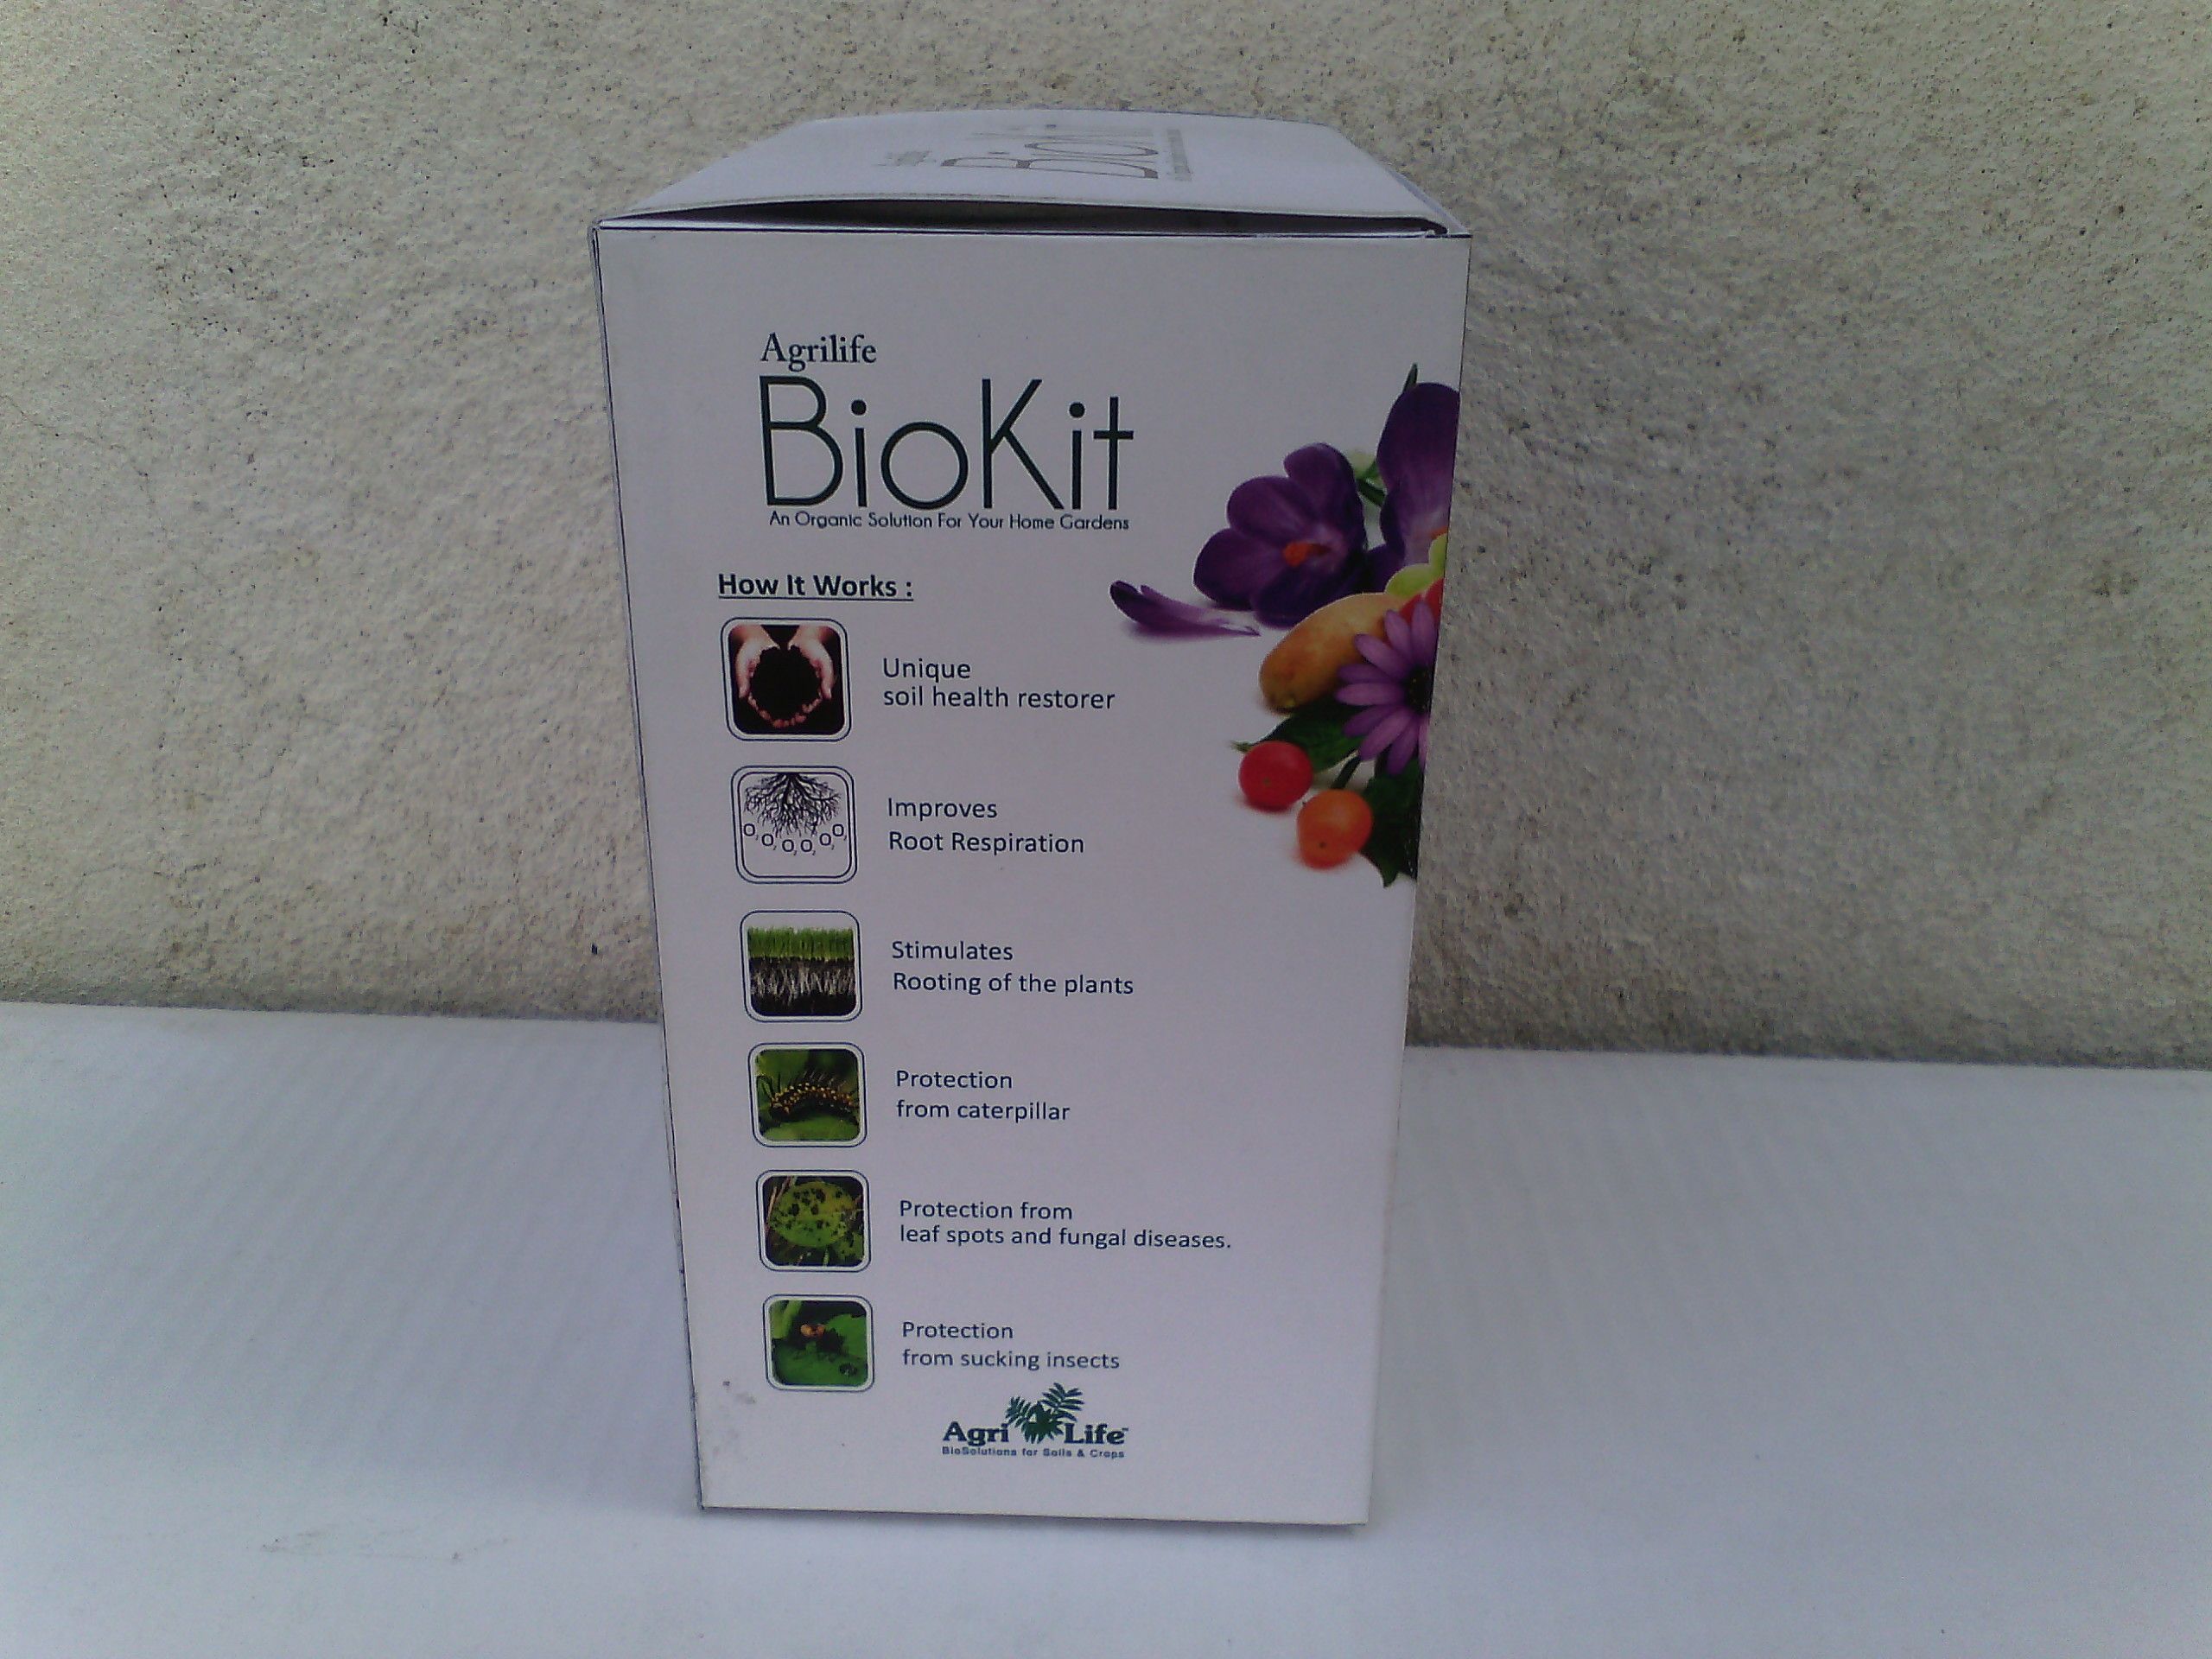 AgriLife Biokit